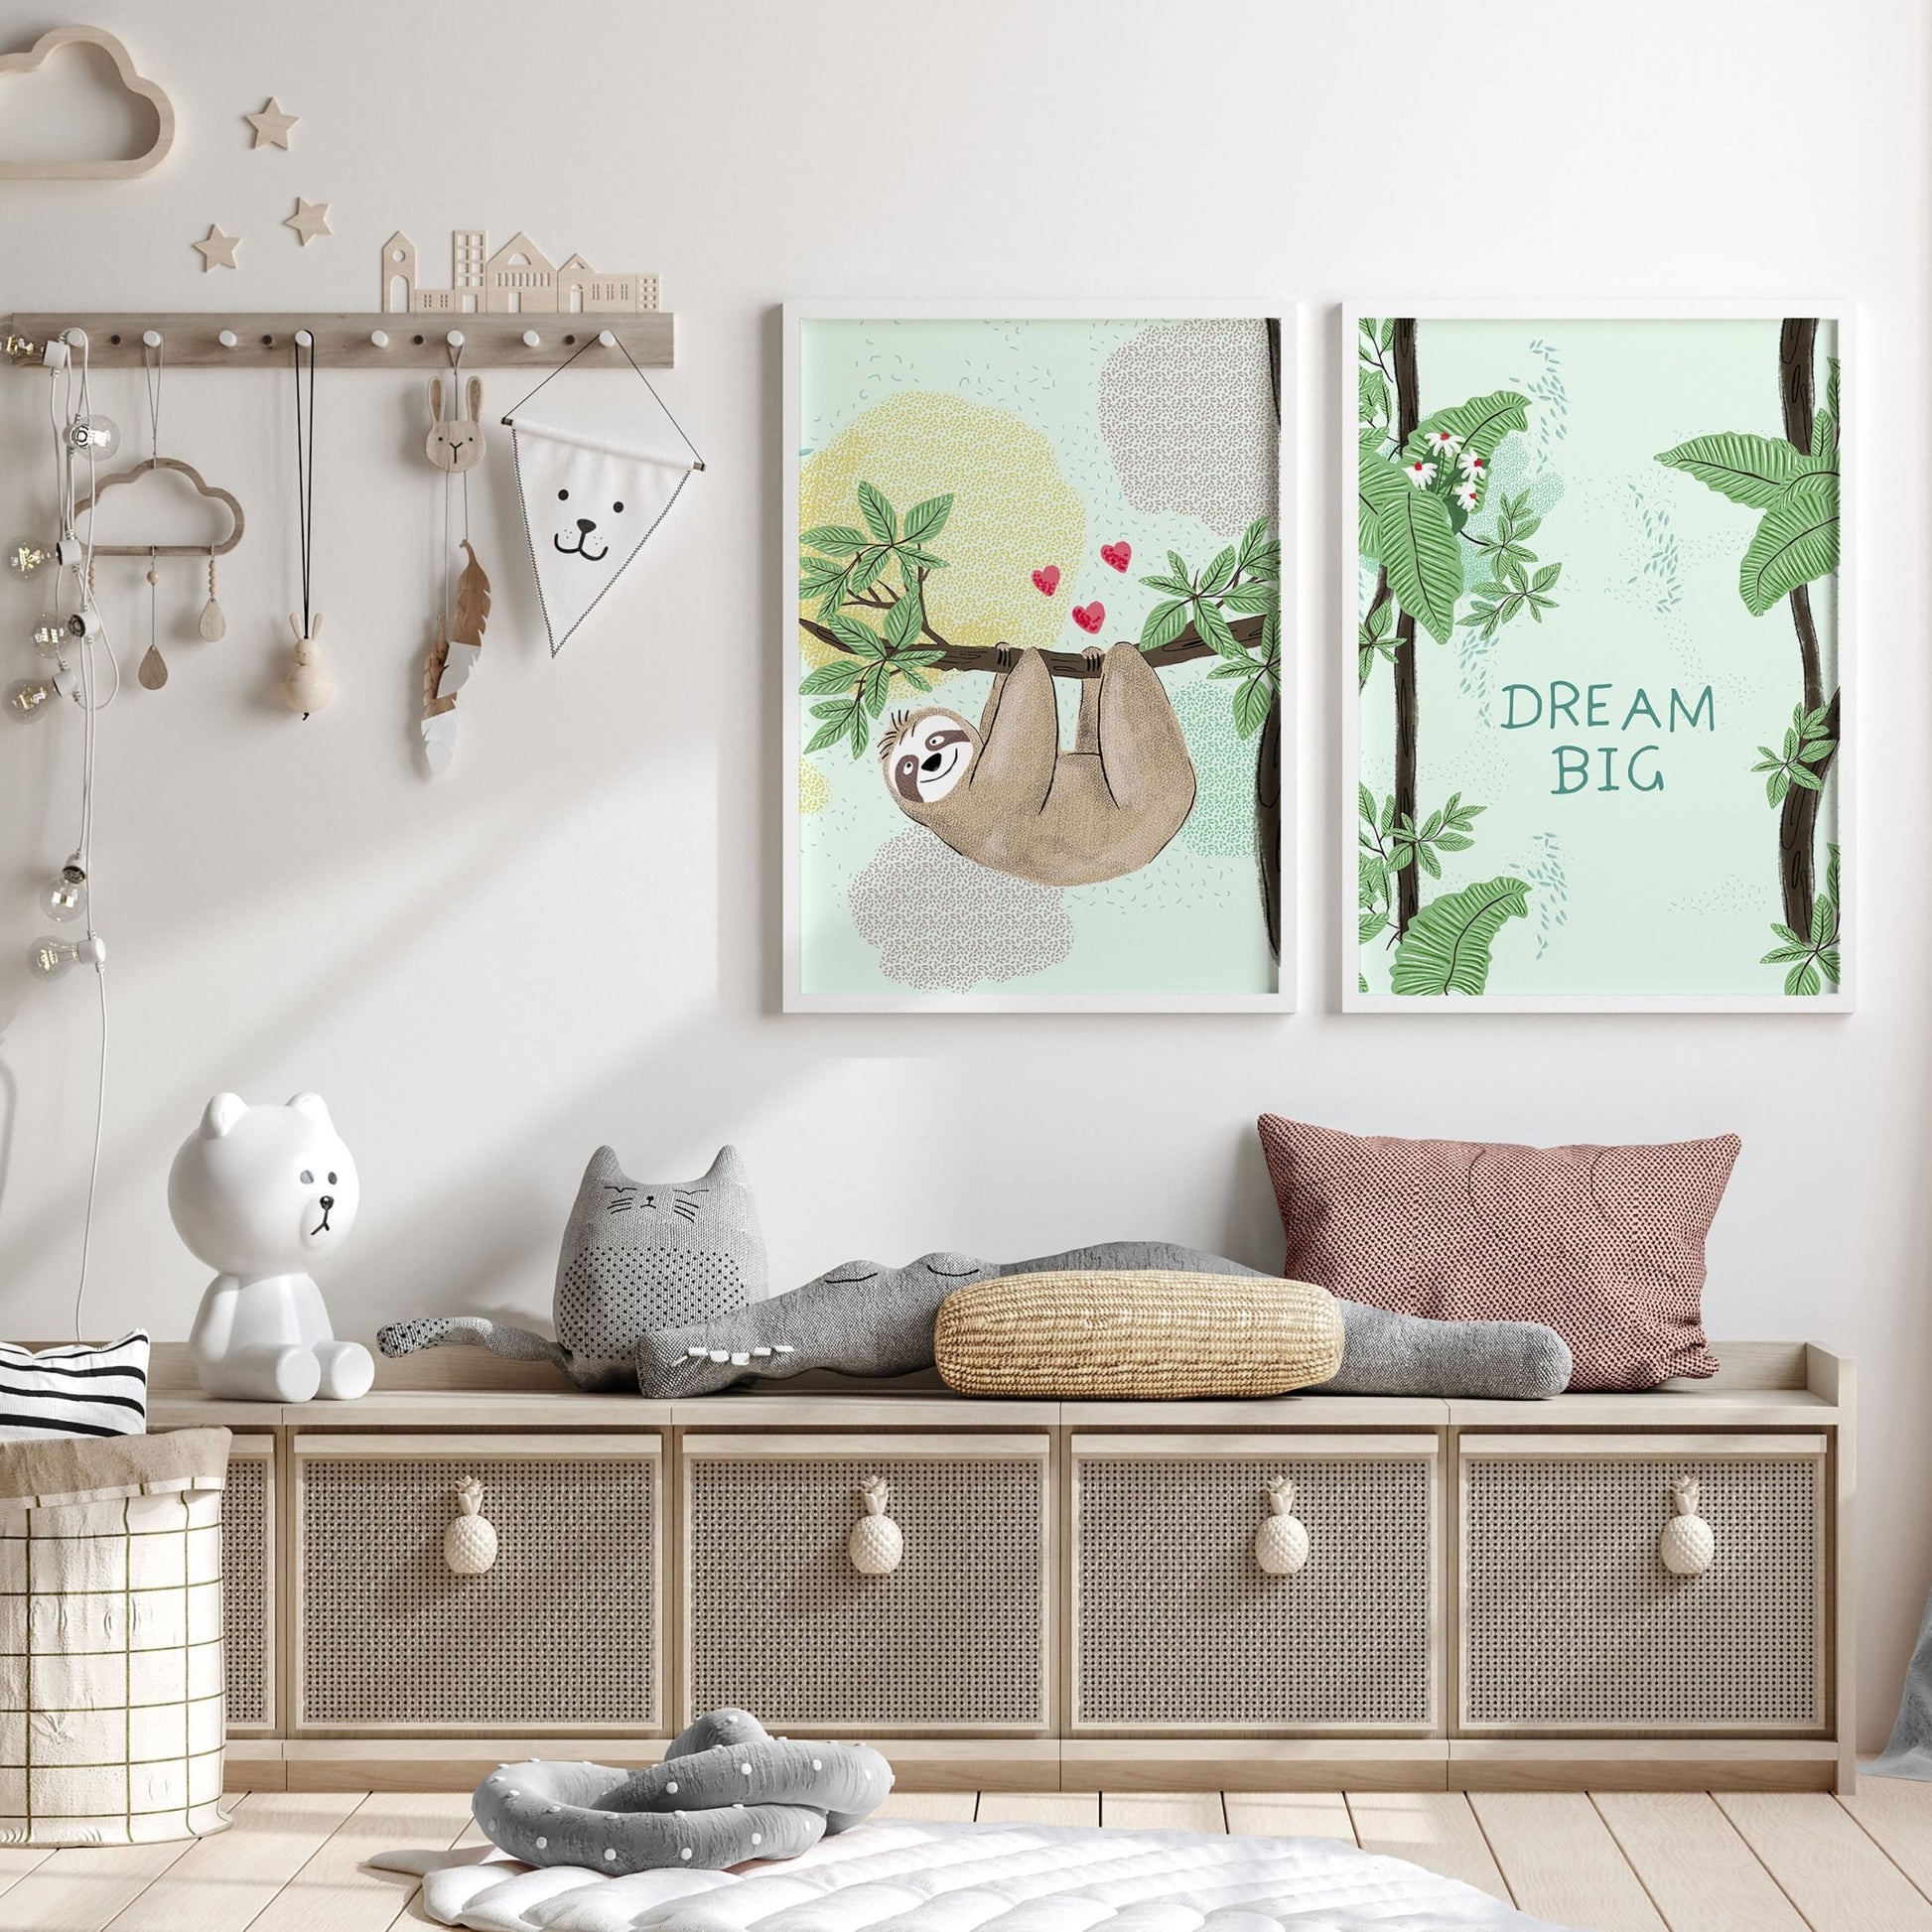 Wall prints nursery | set of 2 Sloths wall art prints